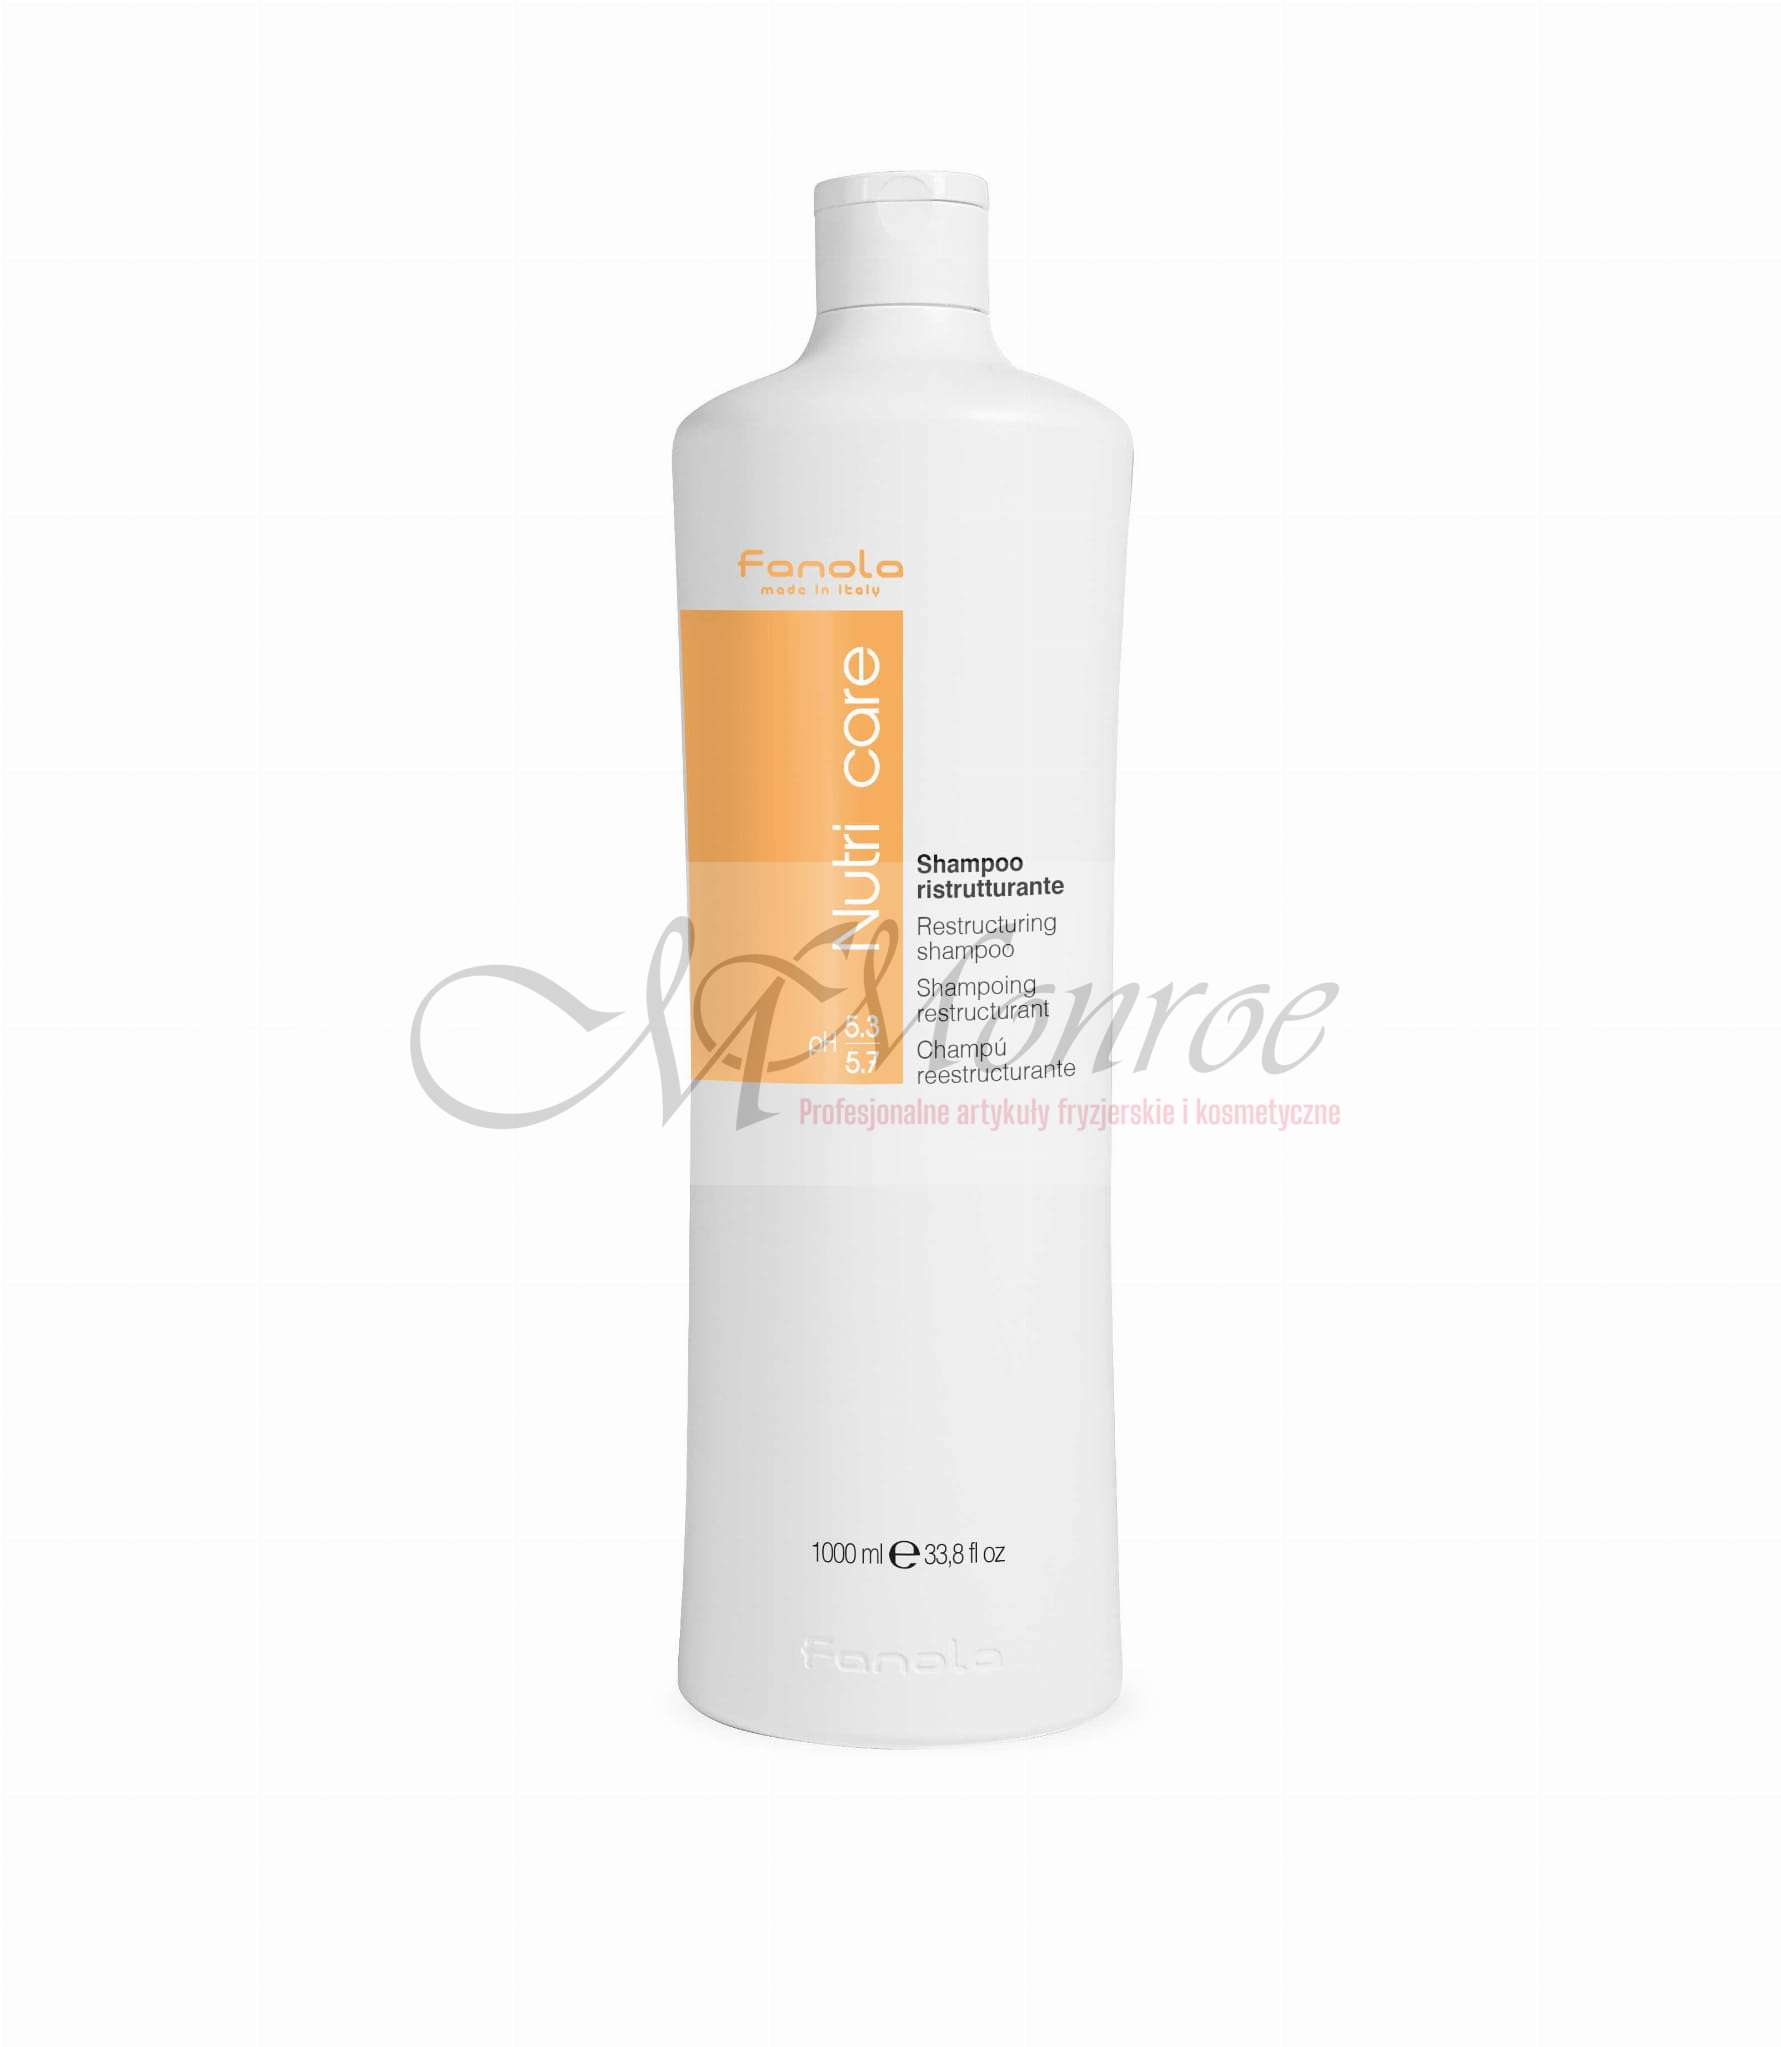 re-balance szampon 1000 ml fanola